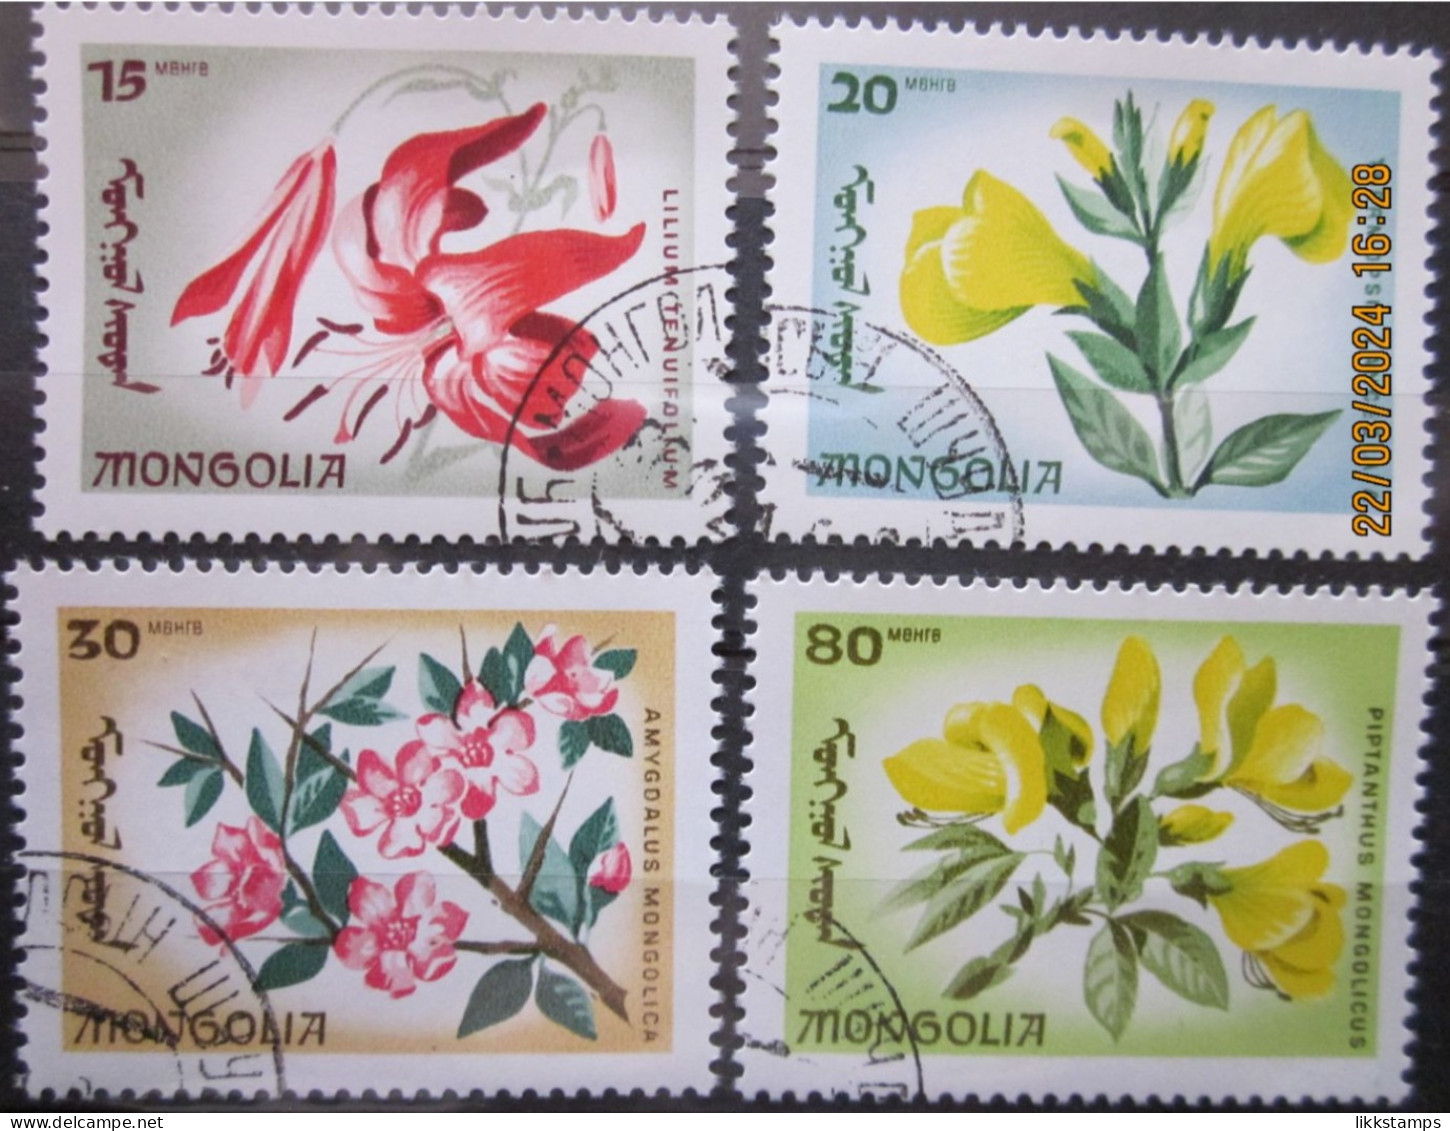 MONGOLIA ~ 1966 ~ S.G. NUMBERS 415 - 417 + 419, ~ FLOWERS. ~ VFU #03468 - Mongolei